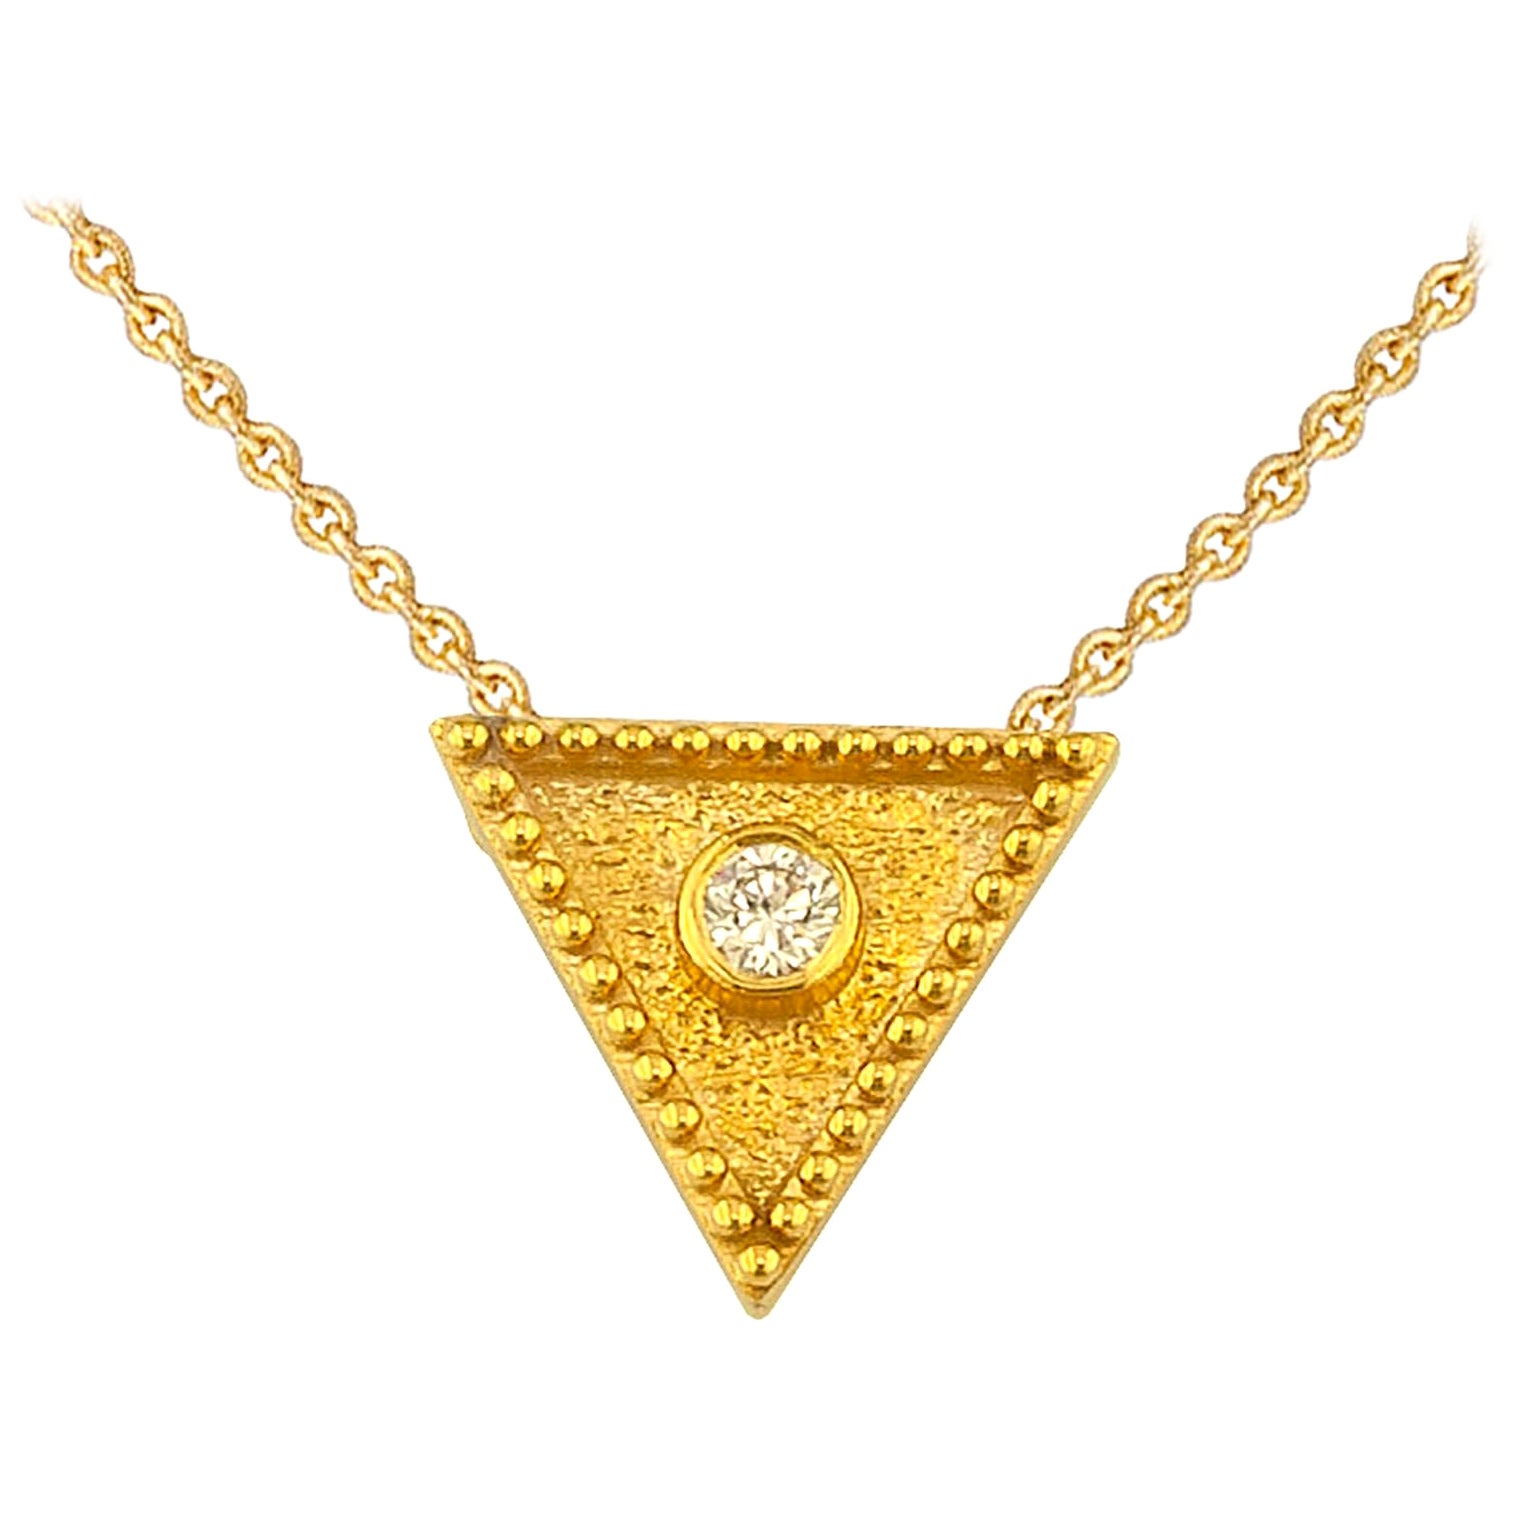 Georgios Collections Collier pendentif triangulaire en or jaune 18 carats avec diamants